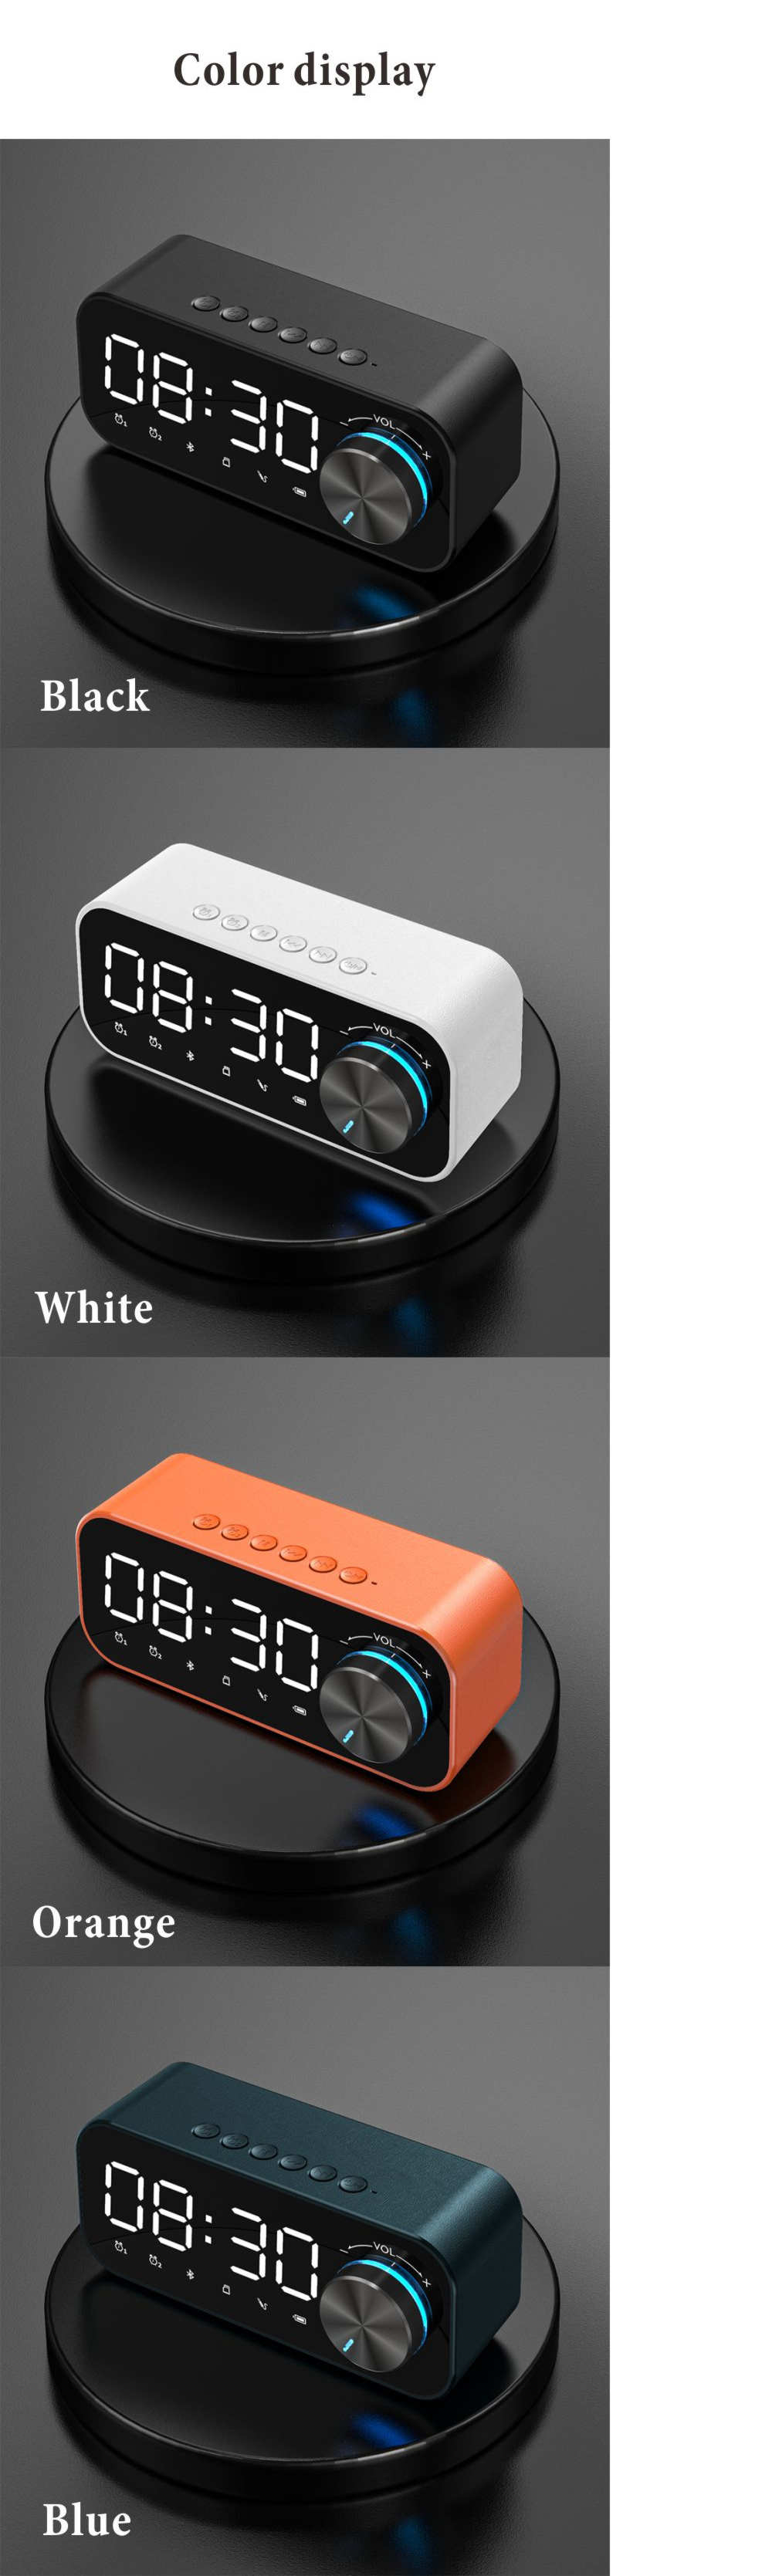 B126-bluetooth-50-Speaker-Alarm-Clock-Night-Light-Multiple-Play-Modes-LED-Display-360deg-Surround-St-1816211-5